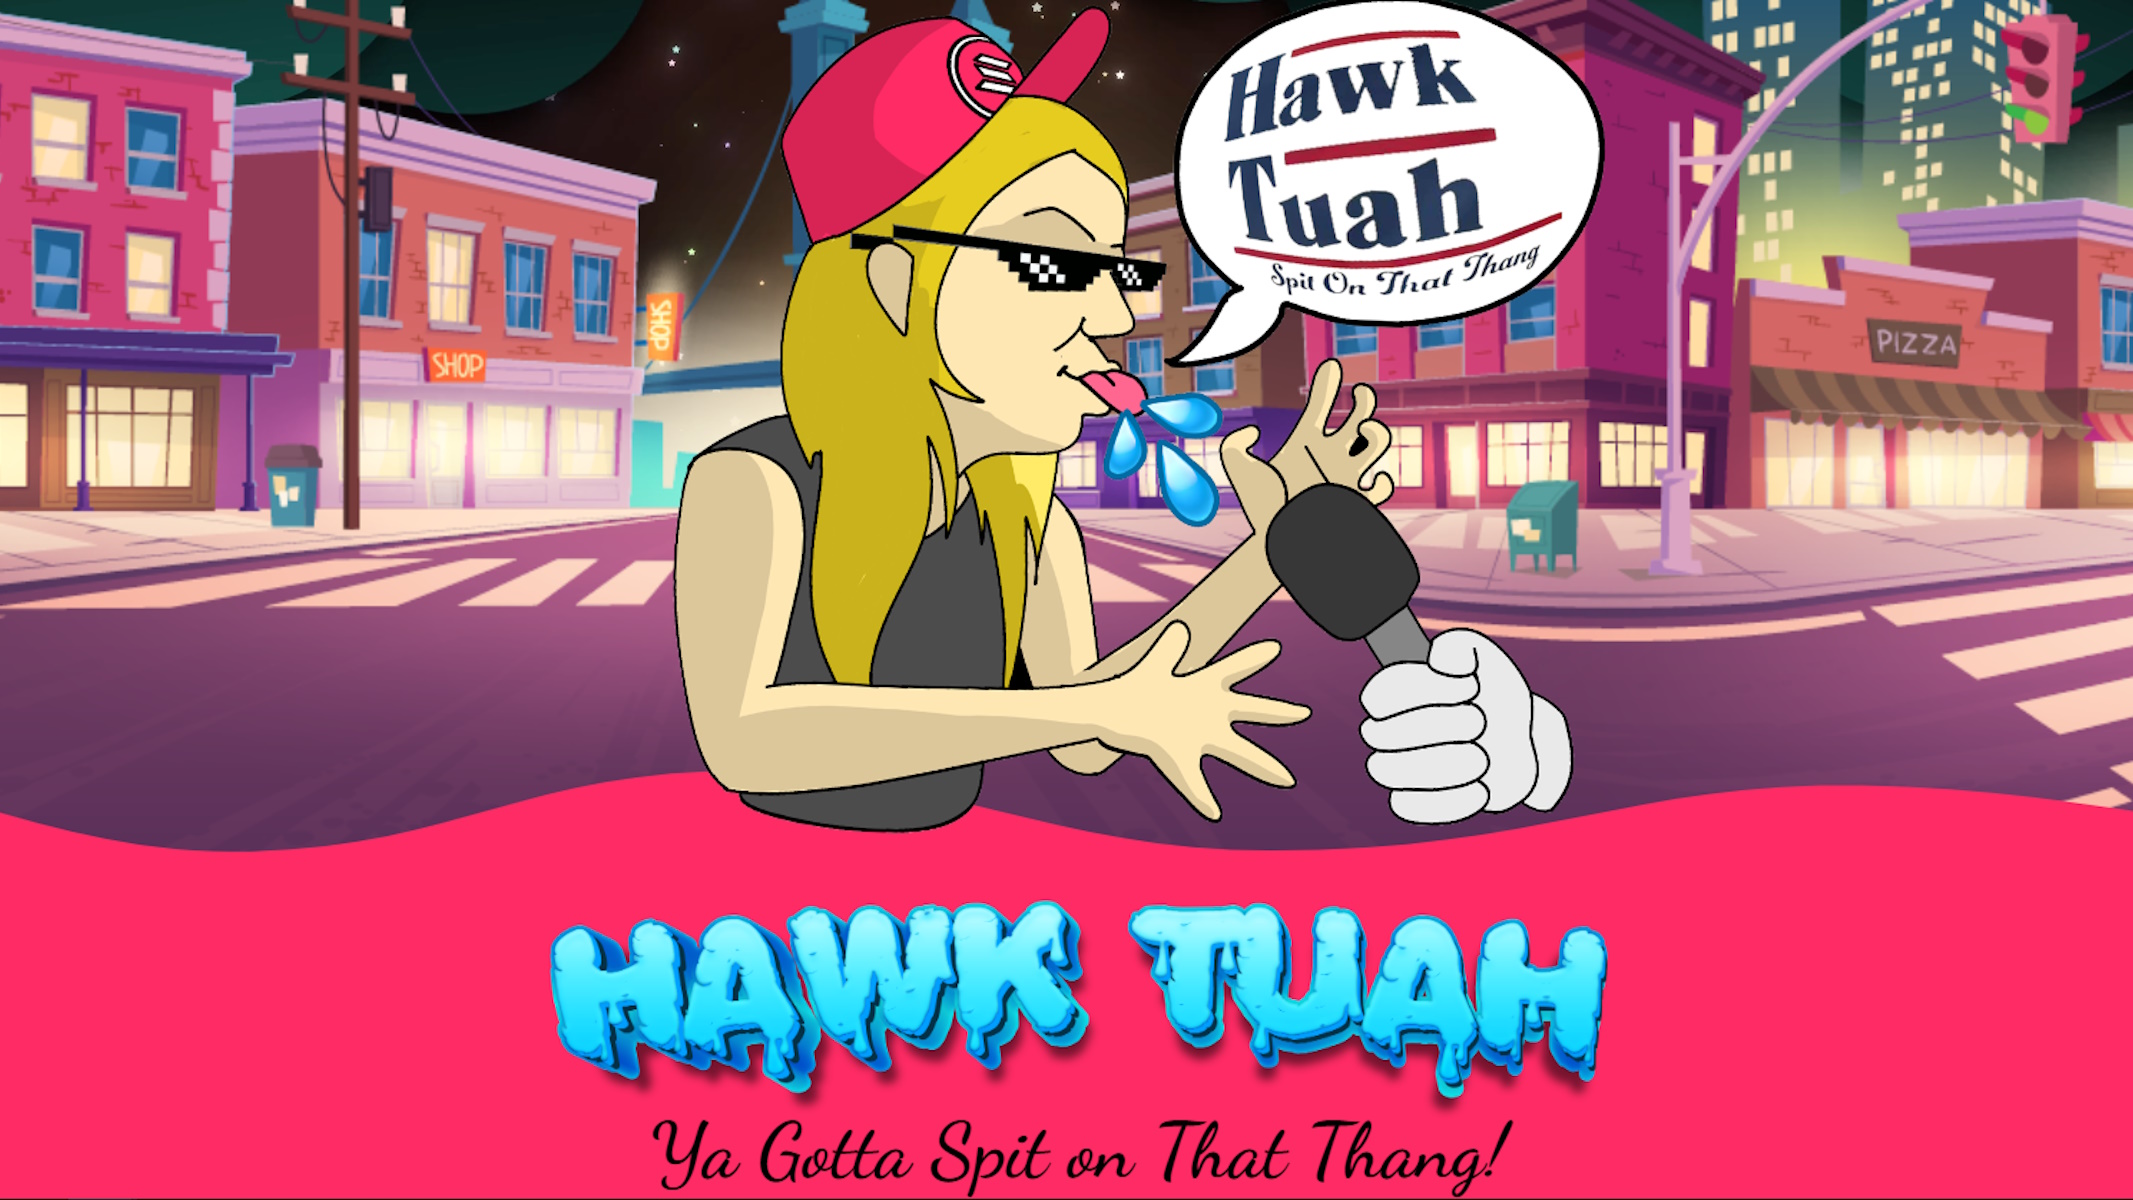 La nuova meme coin Hawk Tuah